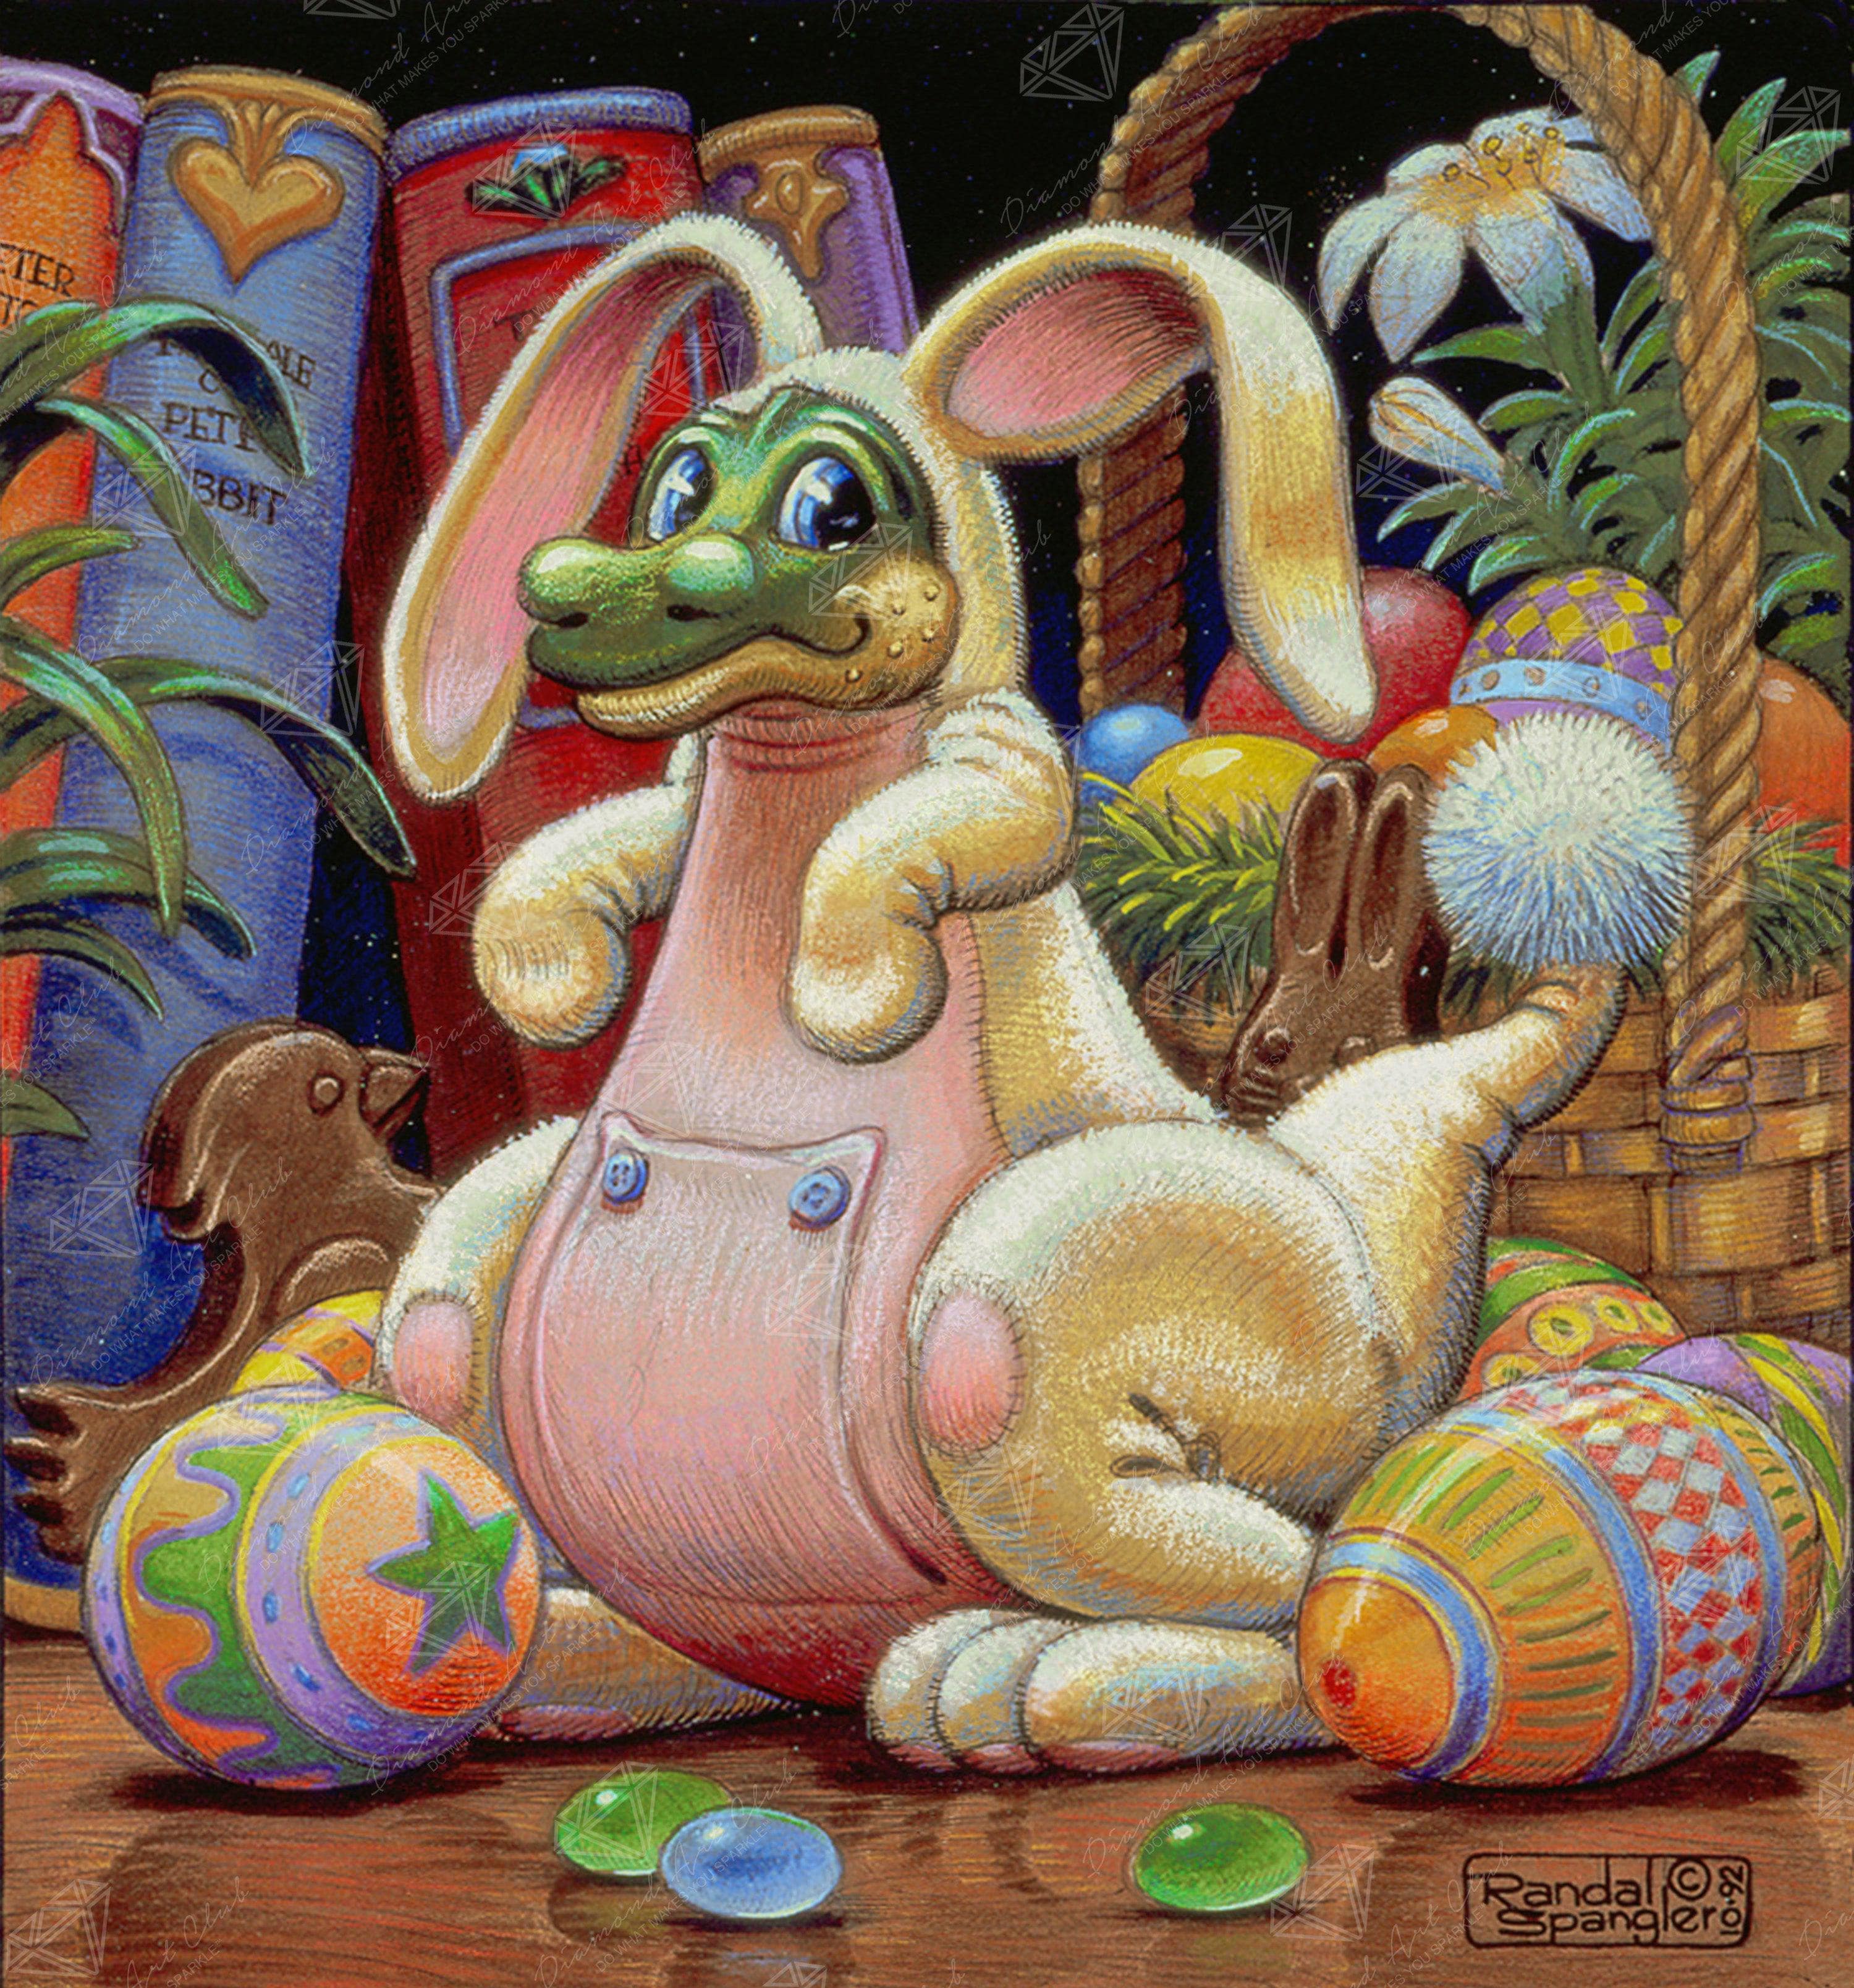 FIYO Diamond Painting Flower Rabbit Animal Mosaic Easter Egg and